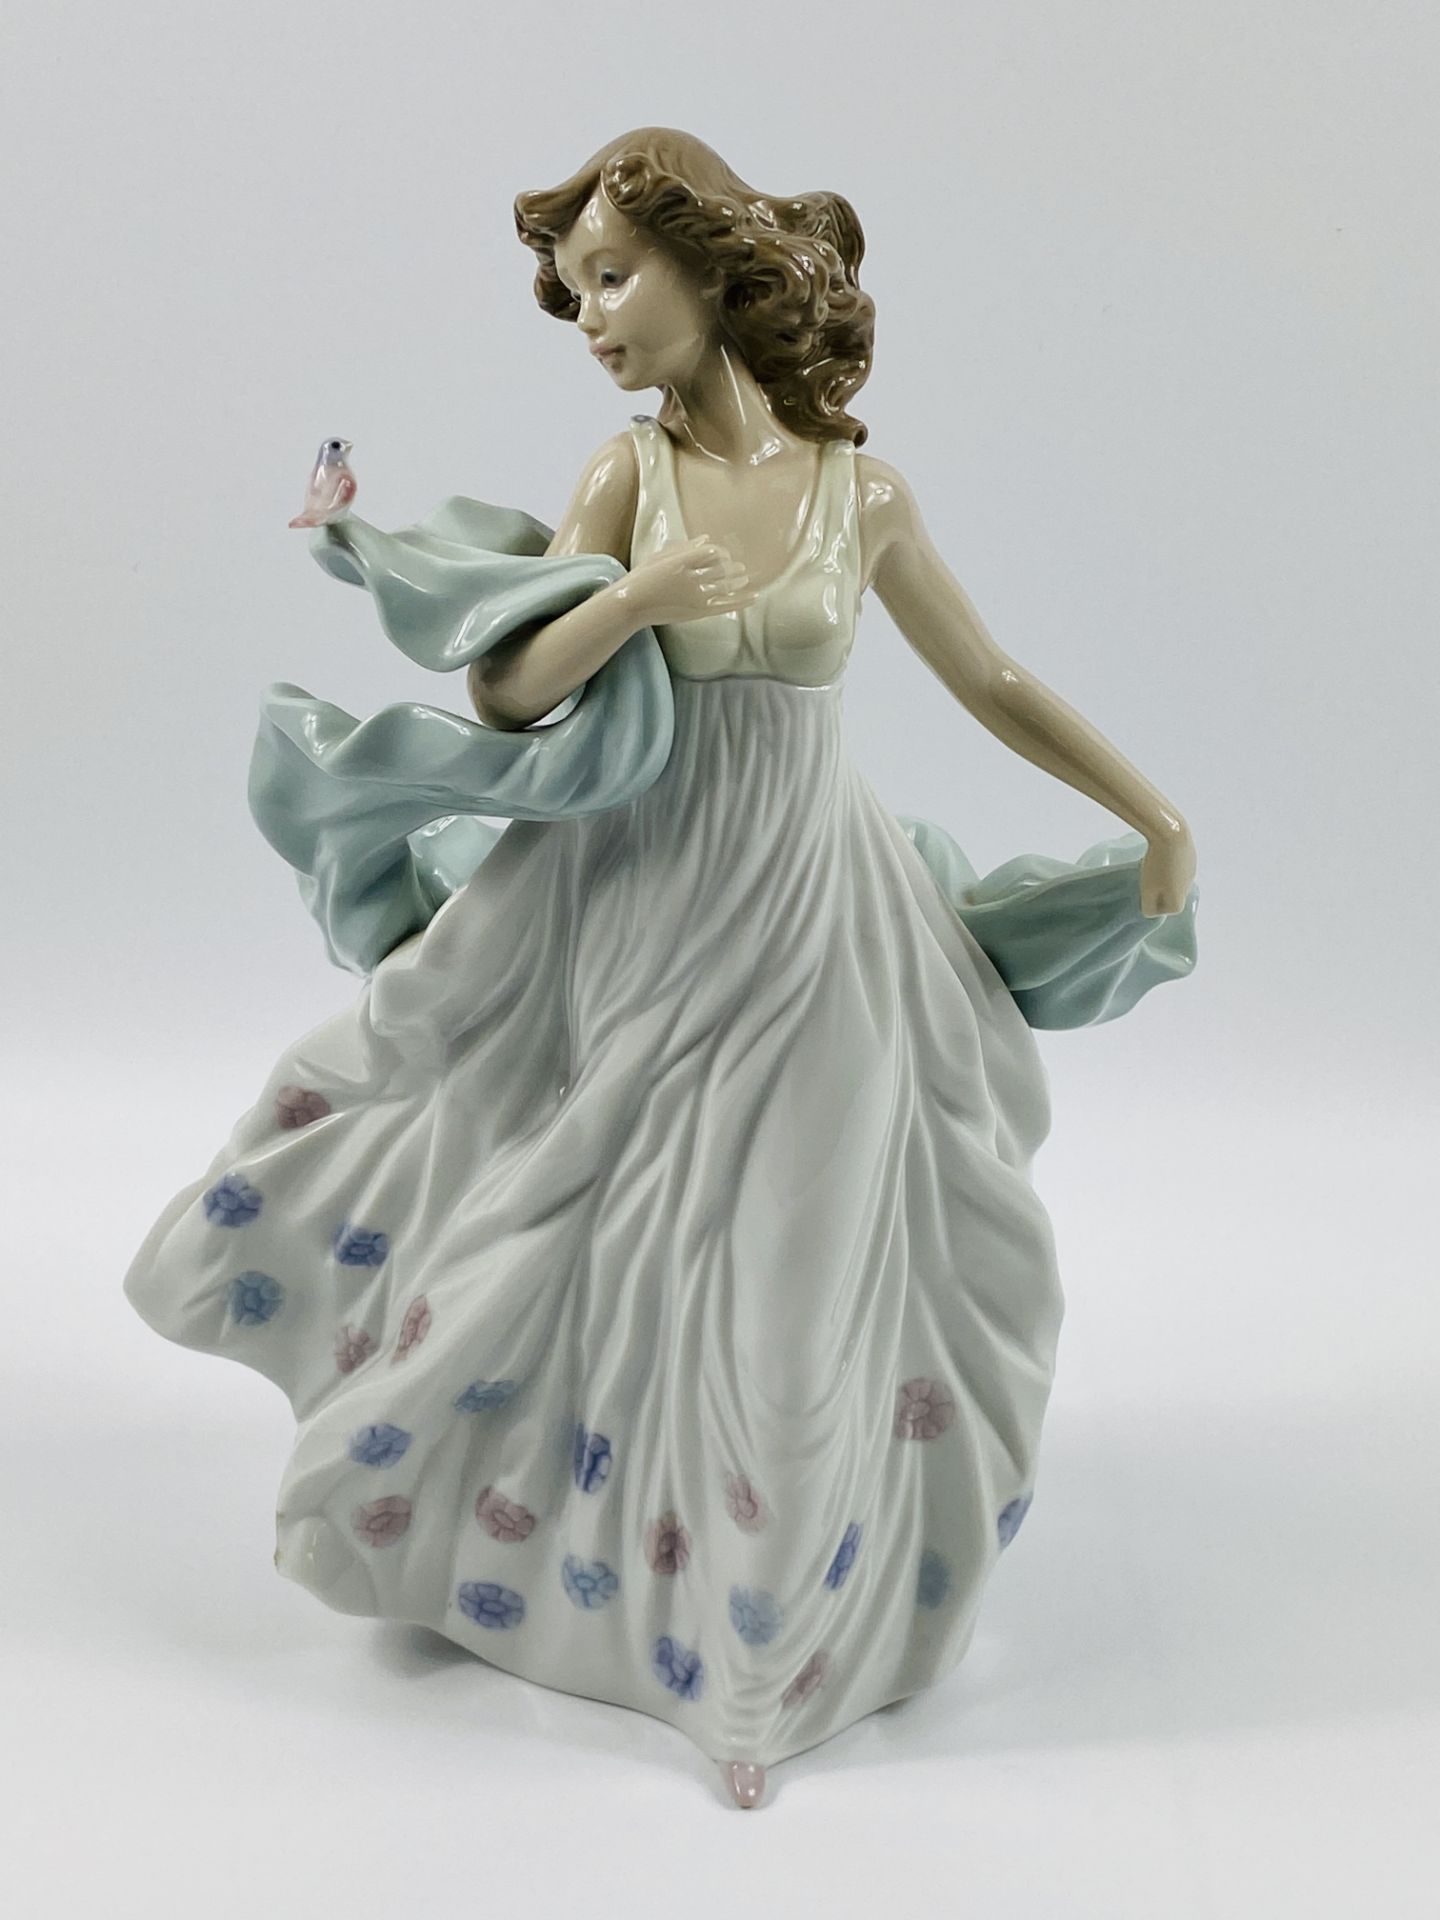 Lladro figurine, Summer Serenade